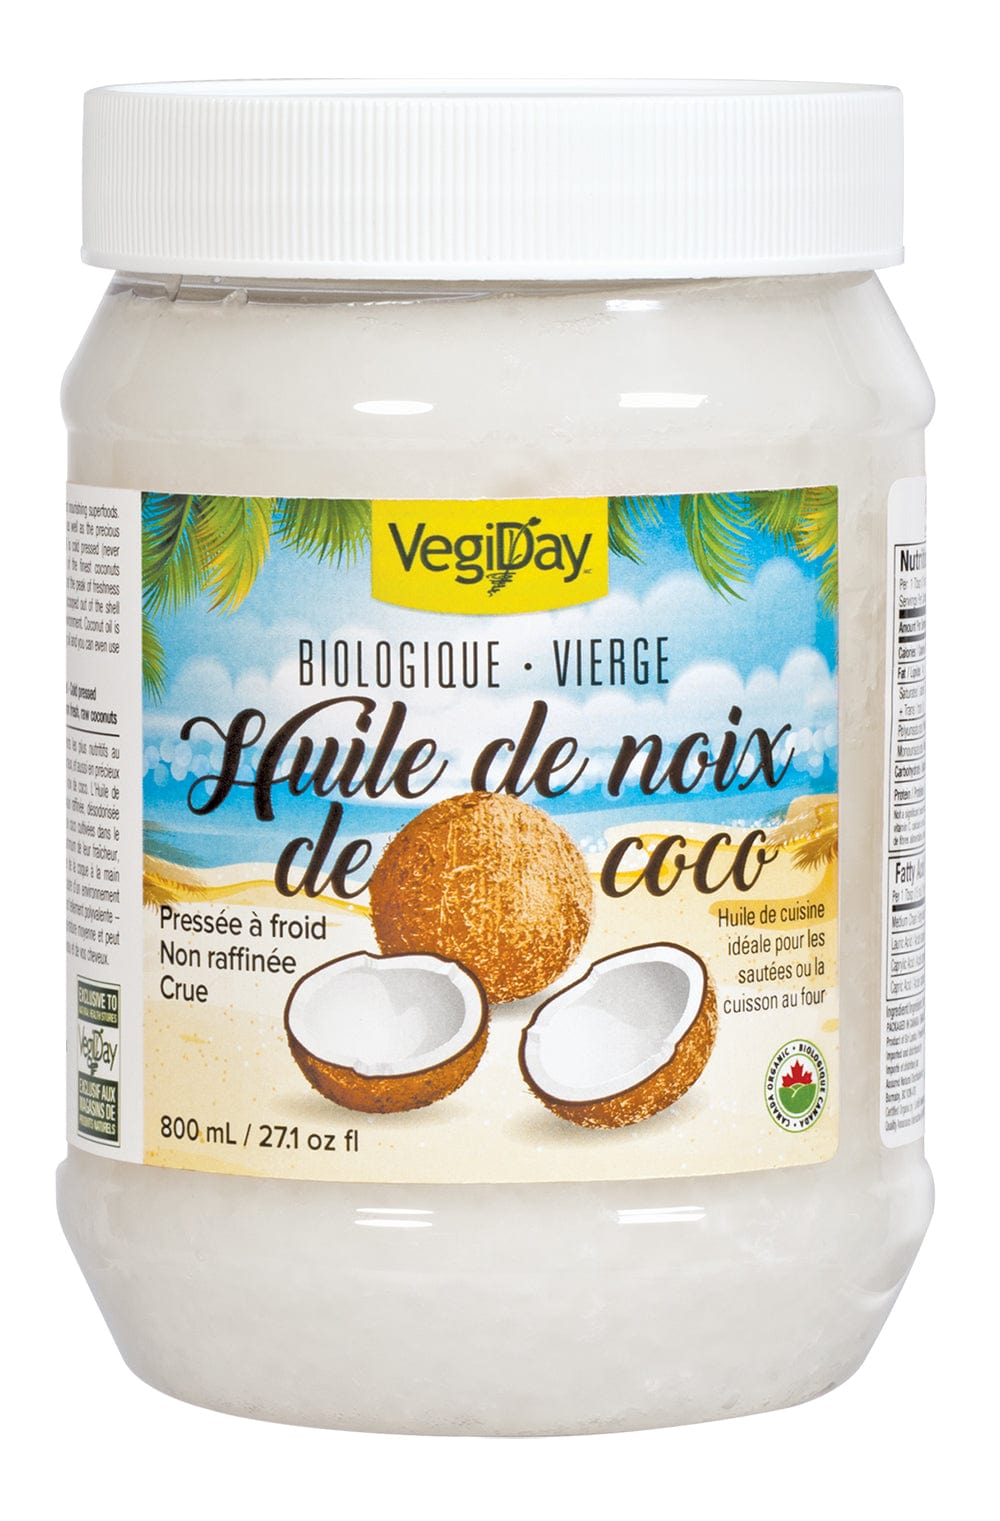 Huile de Coco Vierge – Cha's Organics